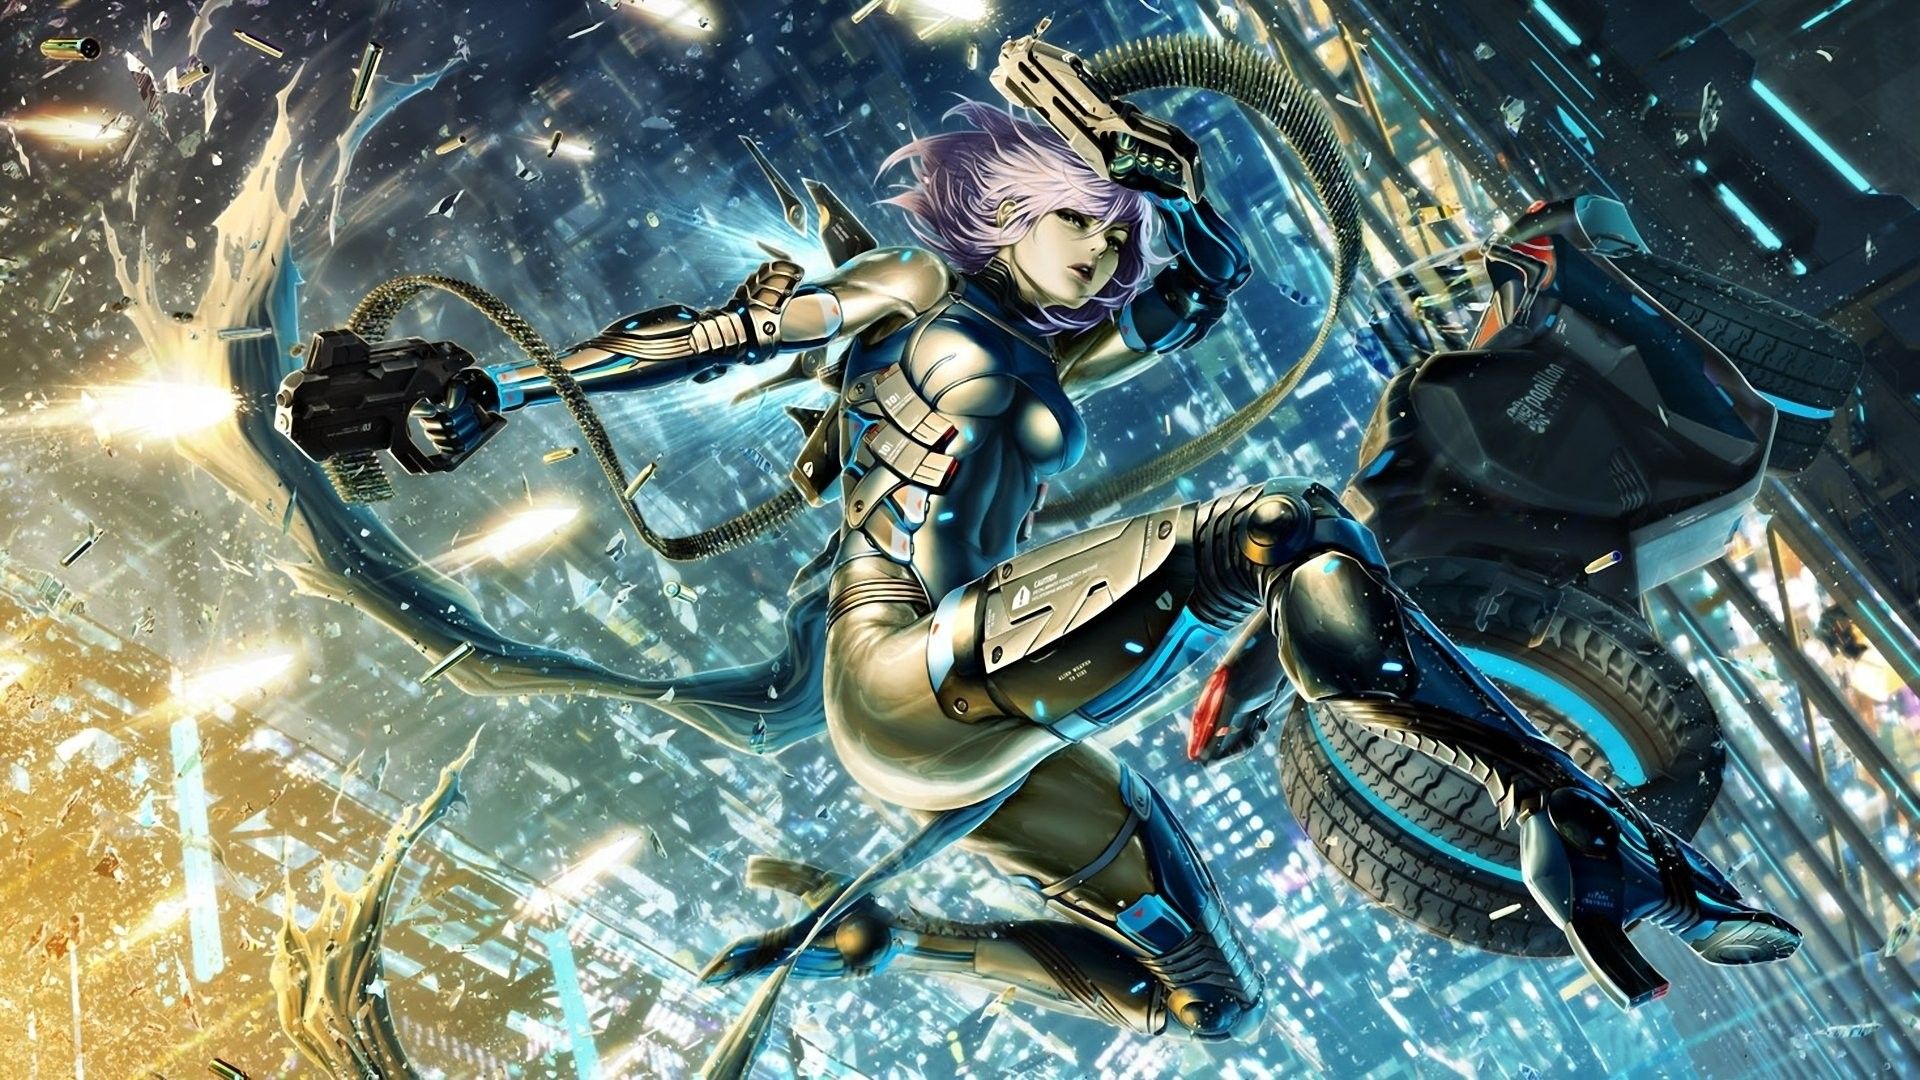 Artwork Fantasy Art Anime Cyborg Futuristic City Original Characters Cyberpunk Anime Girls Wallpaper:1920x1080